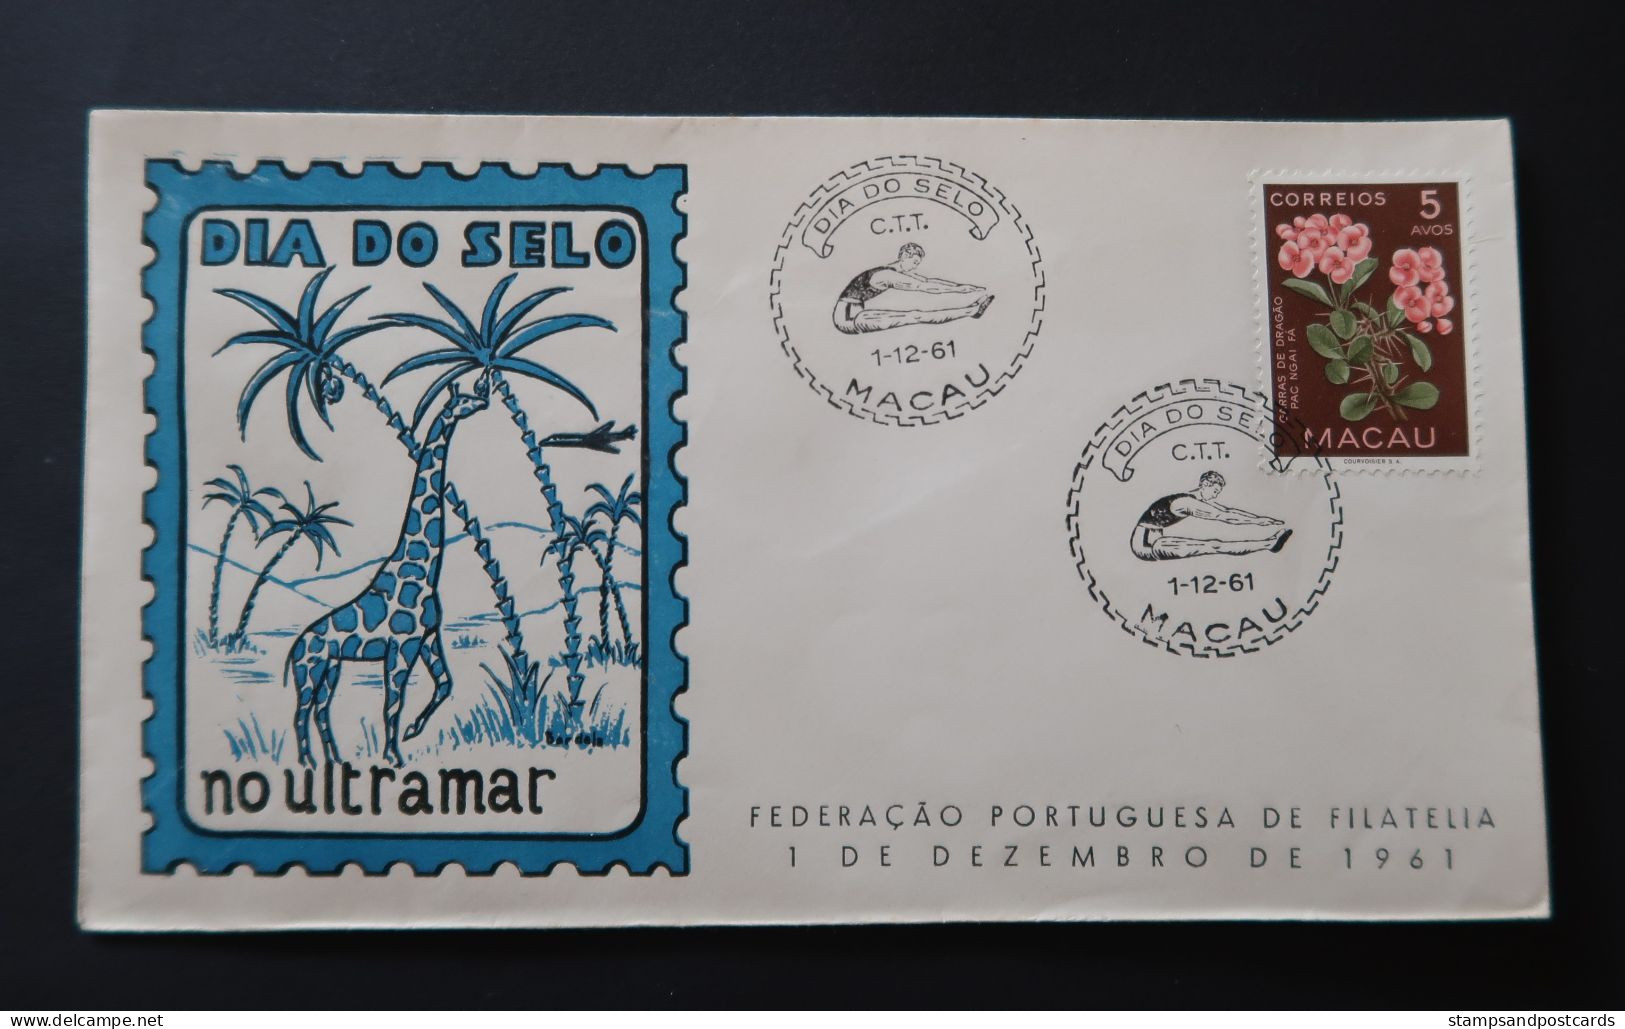 Macao Portugal Cachet Commémoratif Journée Du Timbre 1961 Macau Event Postmark Stamp Day Girafe Giraffe - Covers & Documents